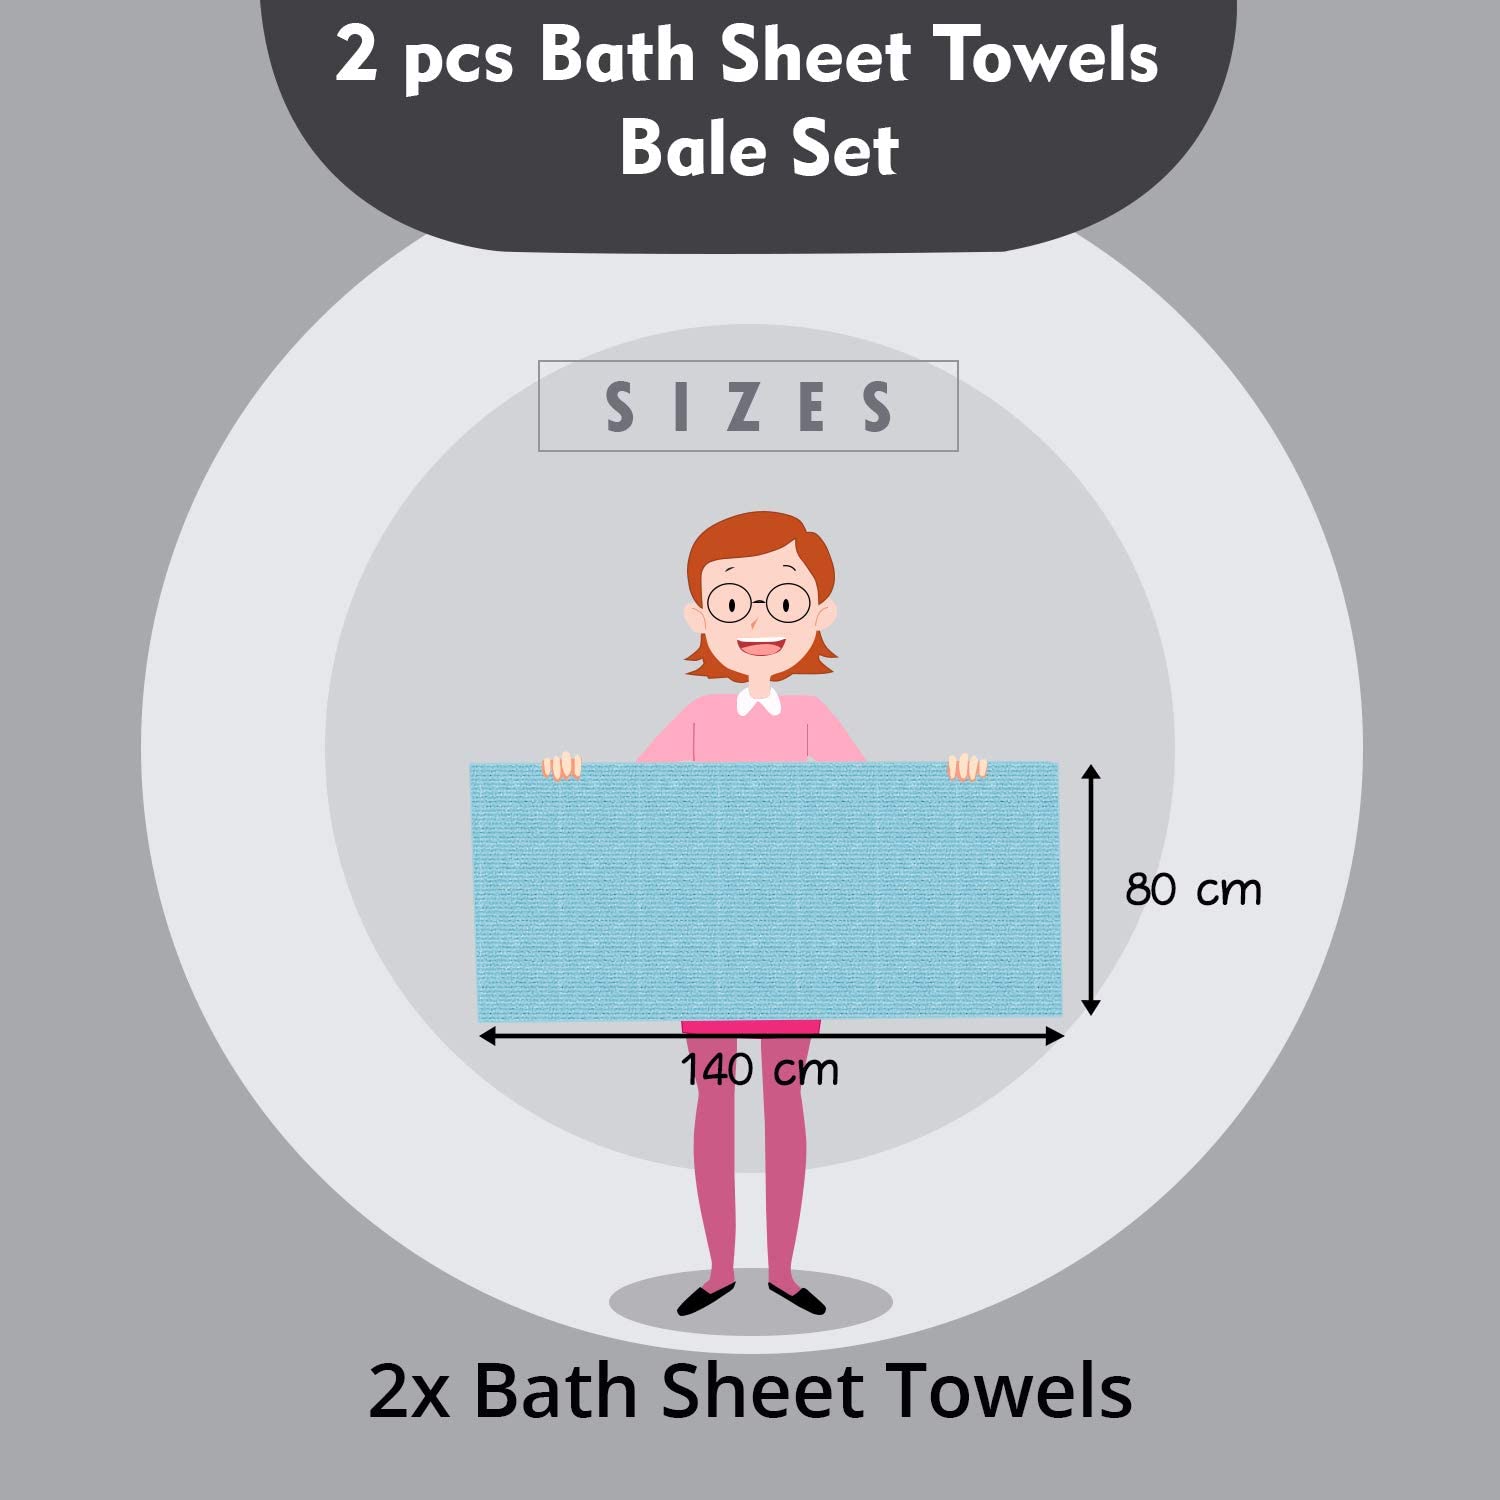 2 Pcs 100 % Cotton Premium Bath Sheet Towel Bale Set Silver Plain